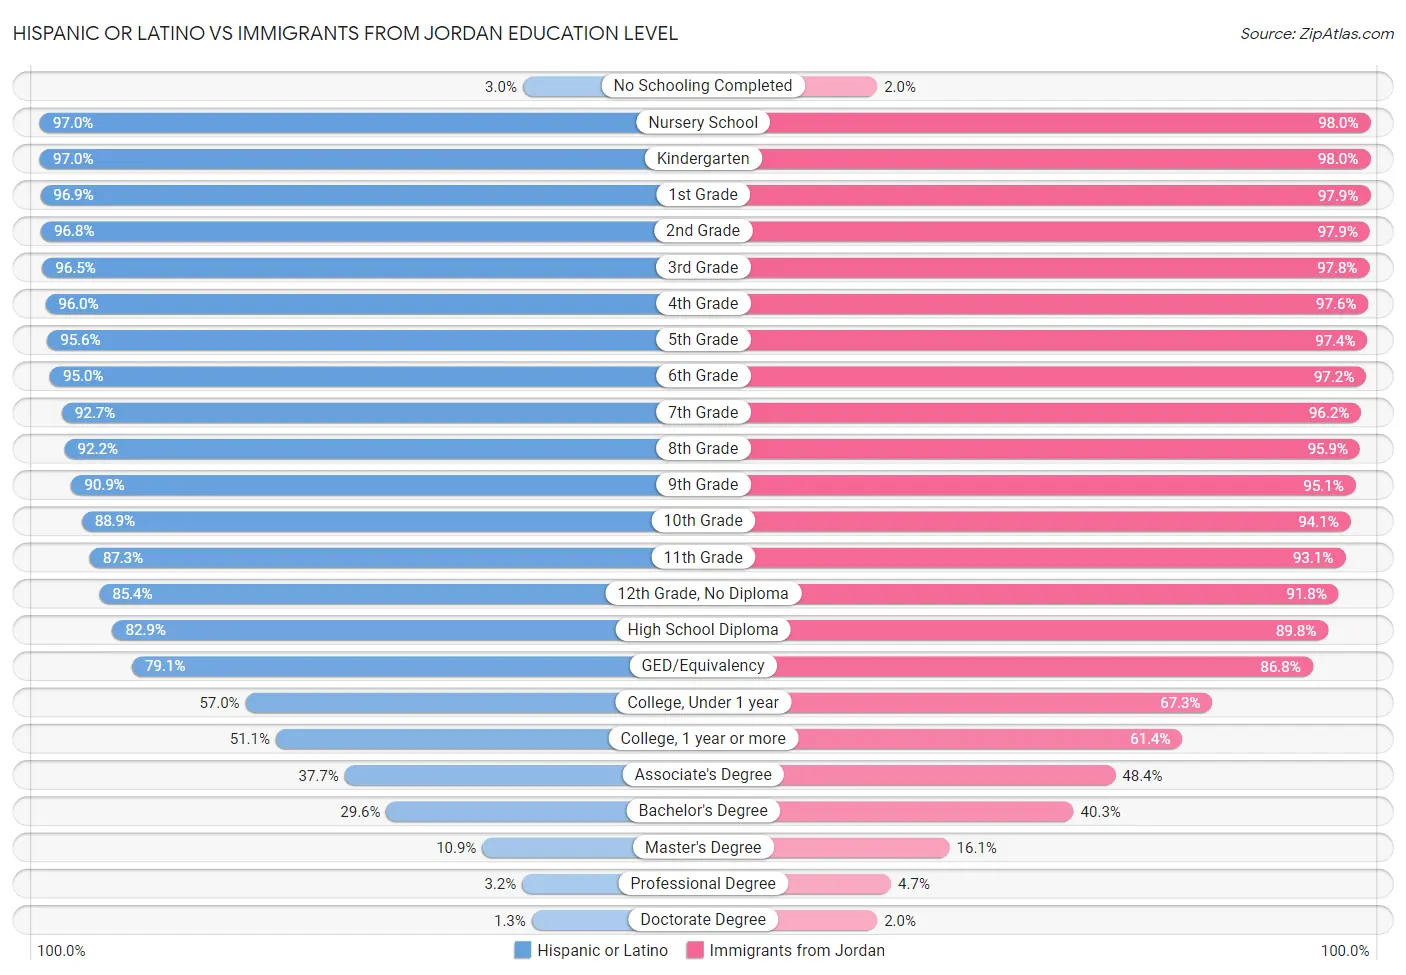 Hispanic or Latino vs Immigrants from Jordan Education Level